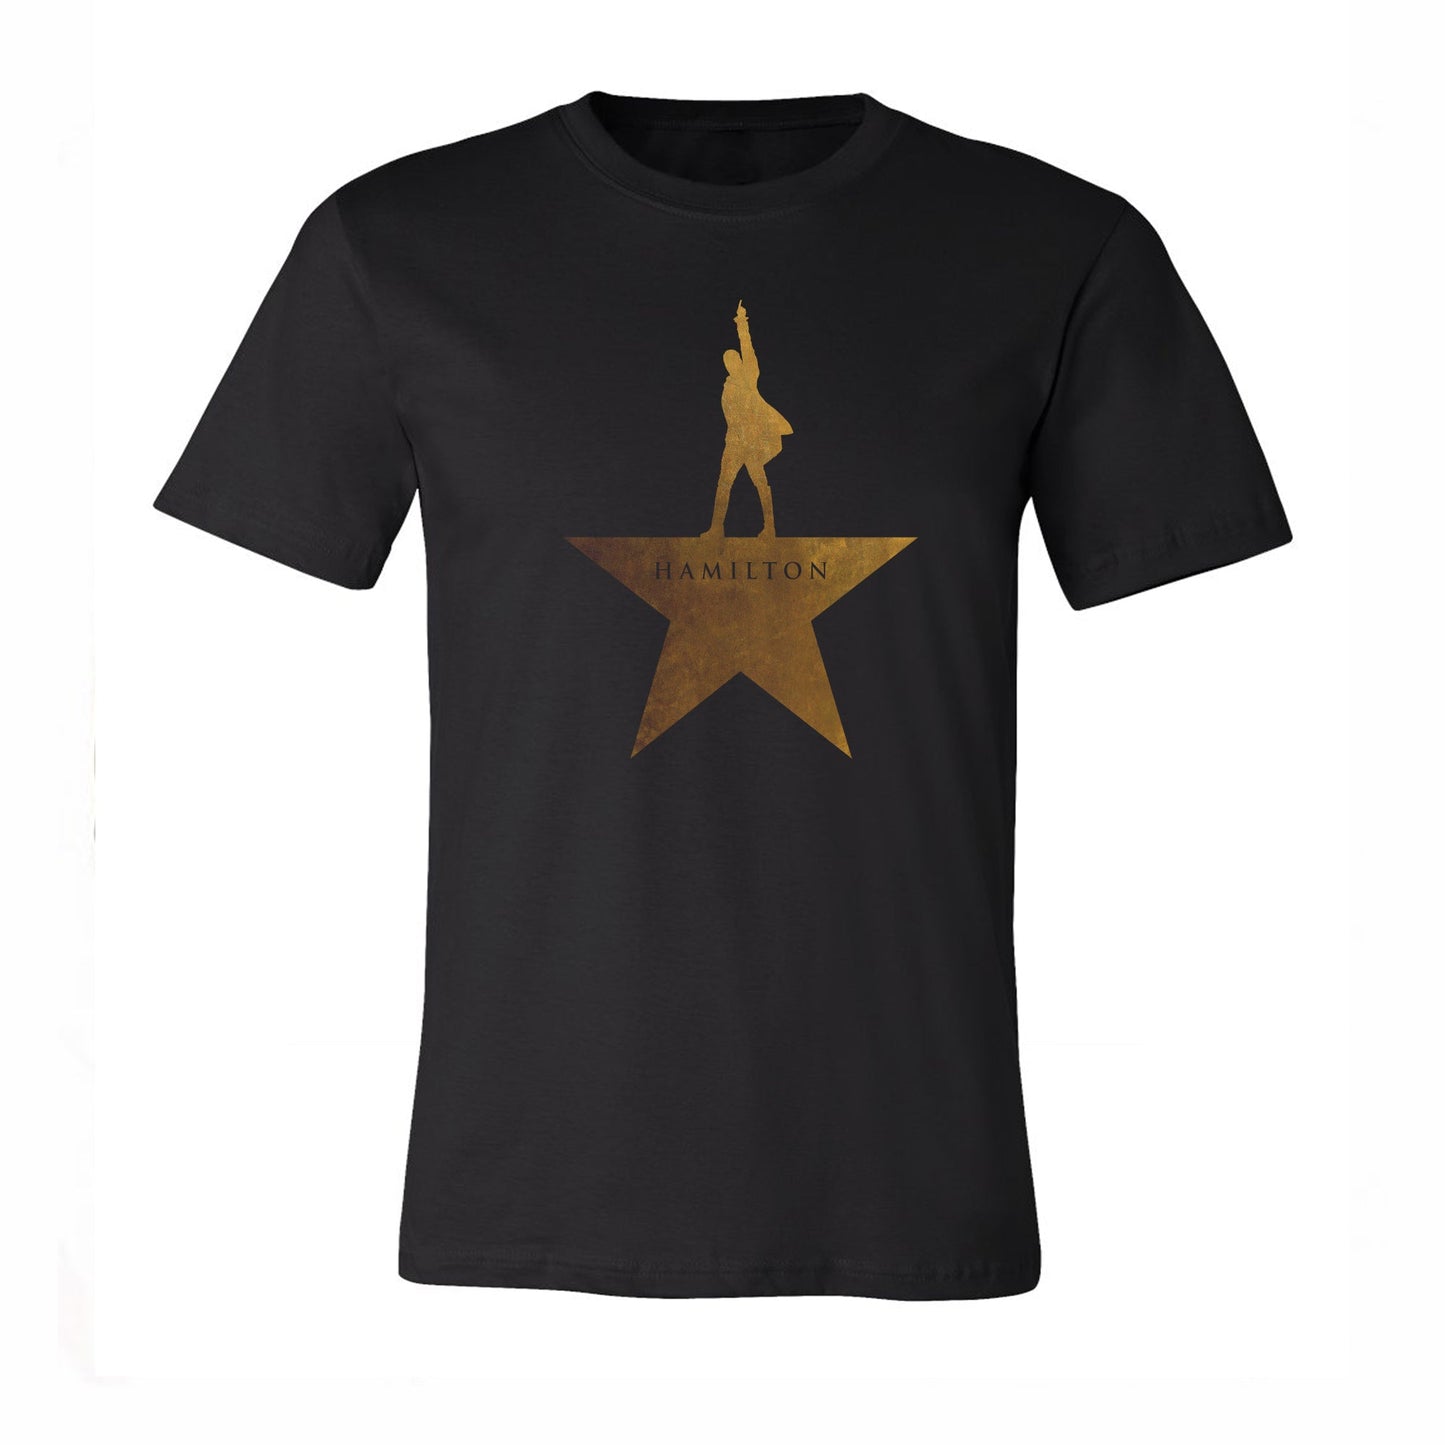 HAMILTON Gold Star Youth T-Shirt